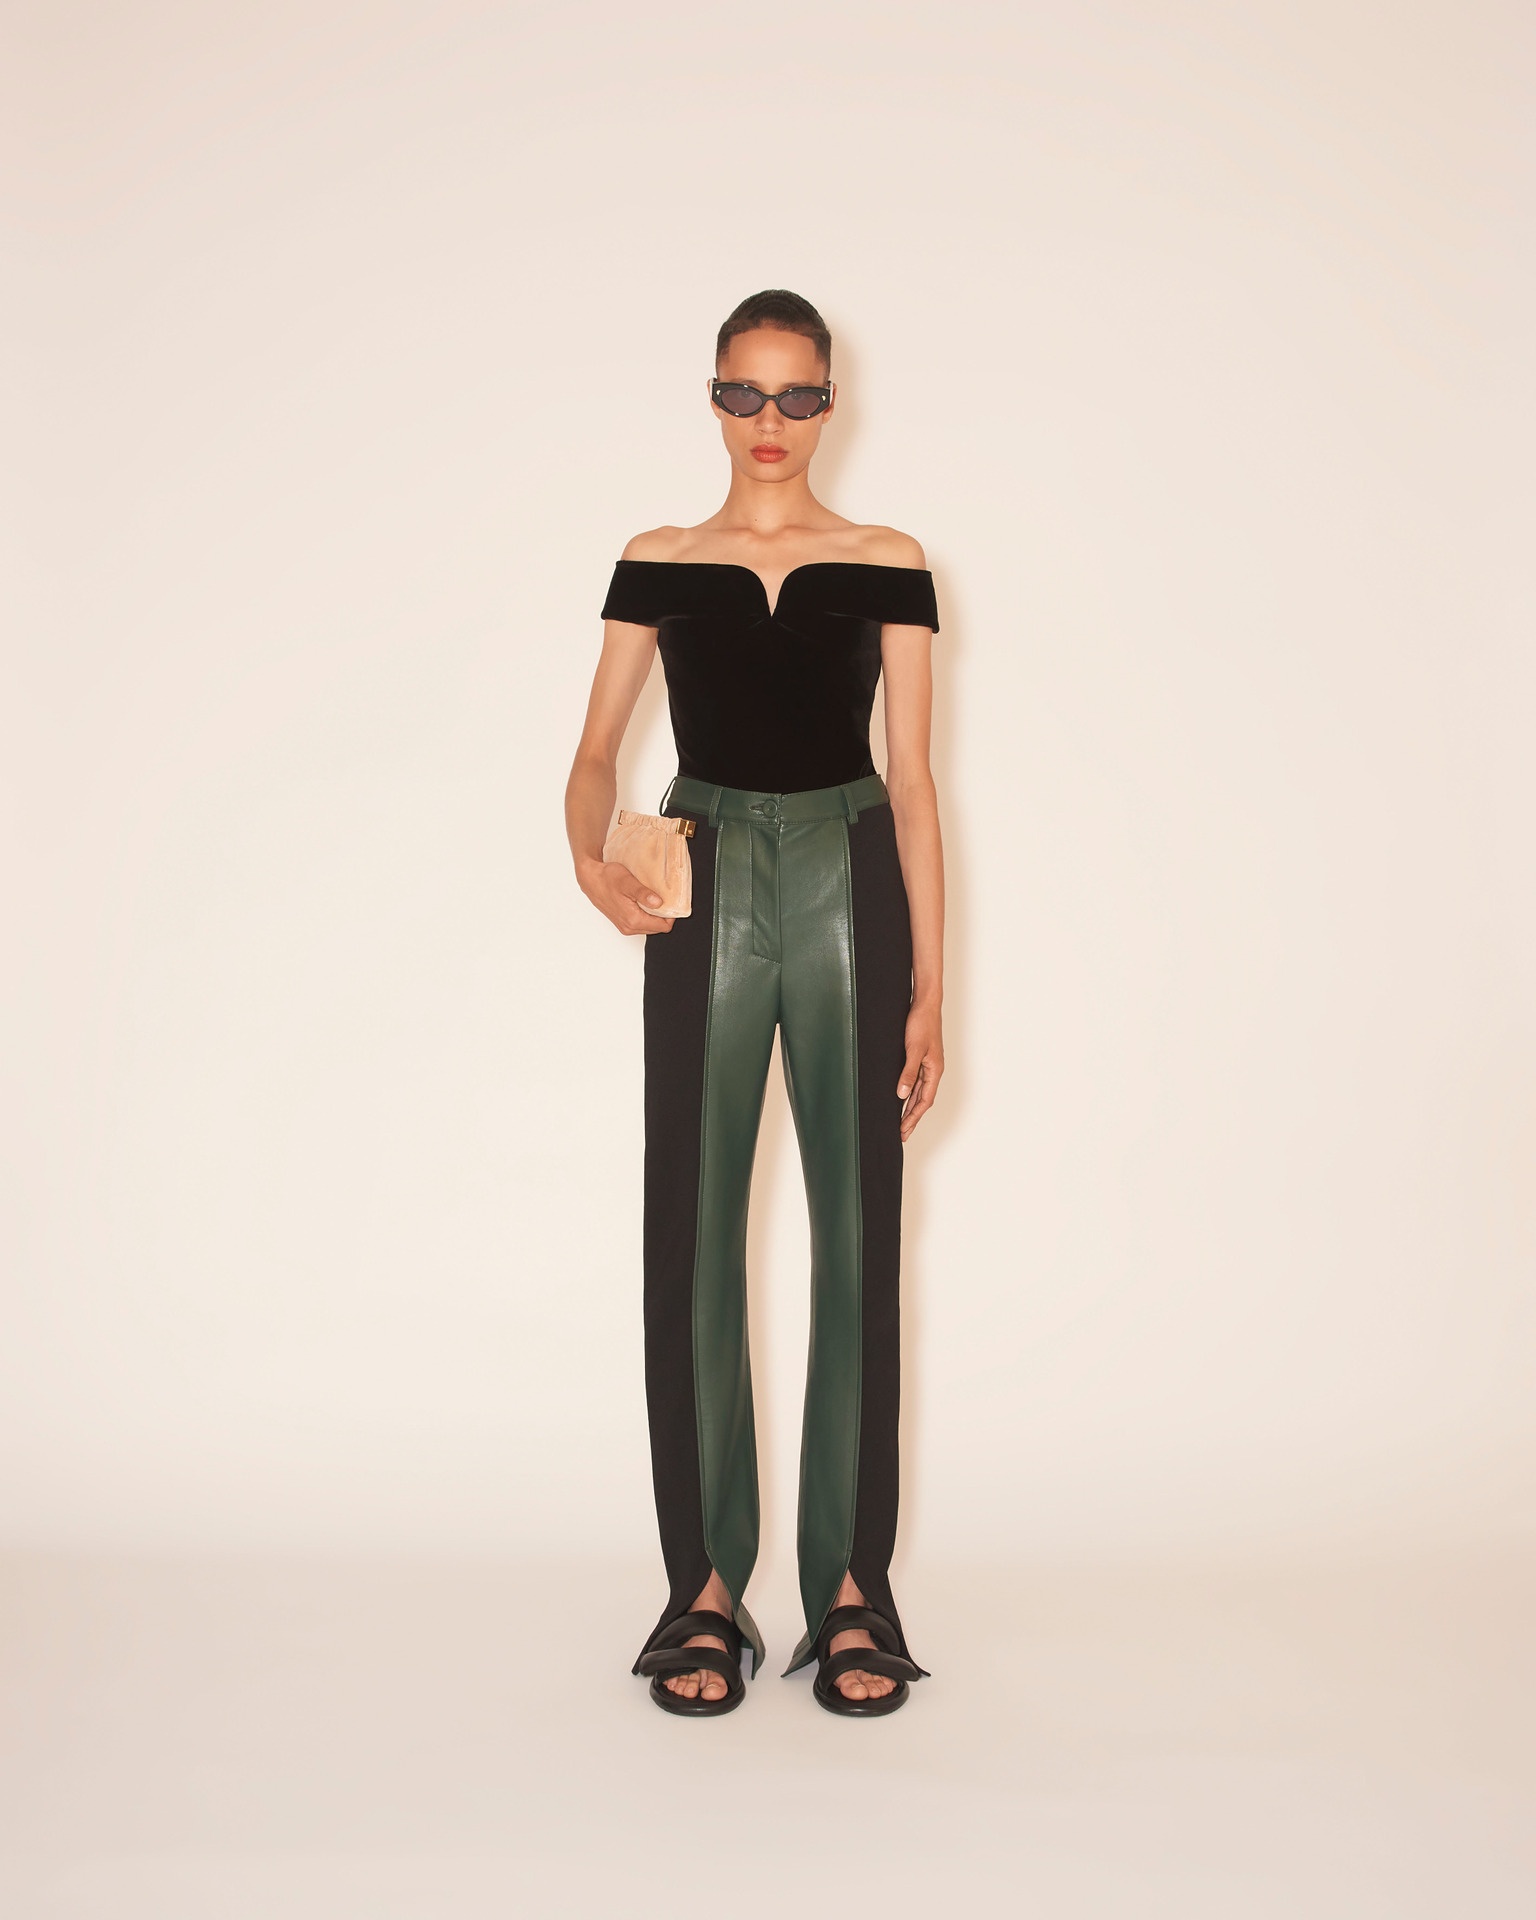 FILO - Contrast trouser - Pine green/black - 2